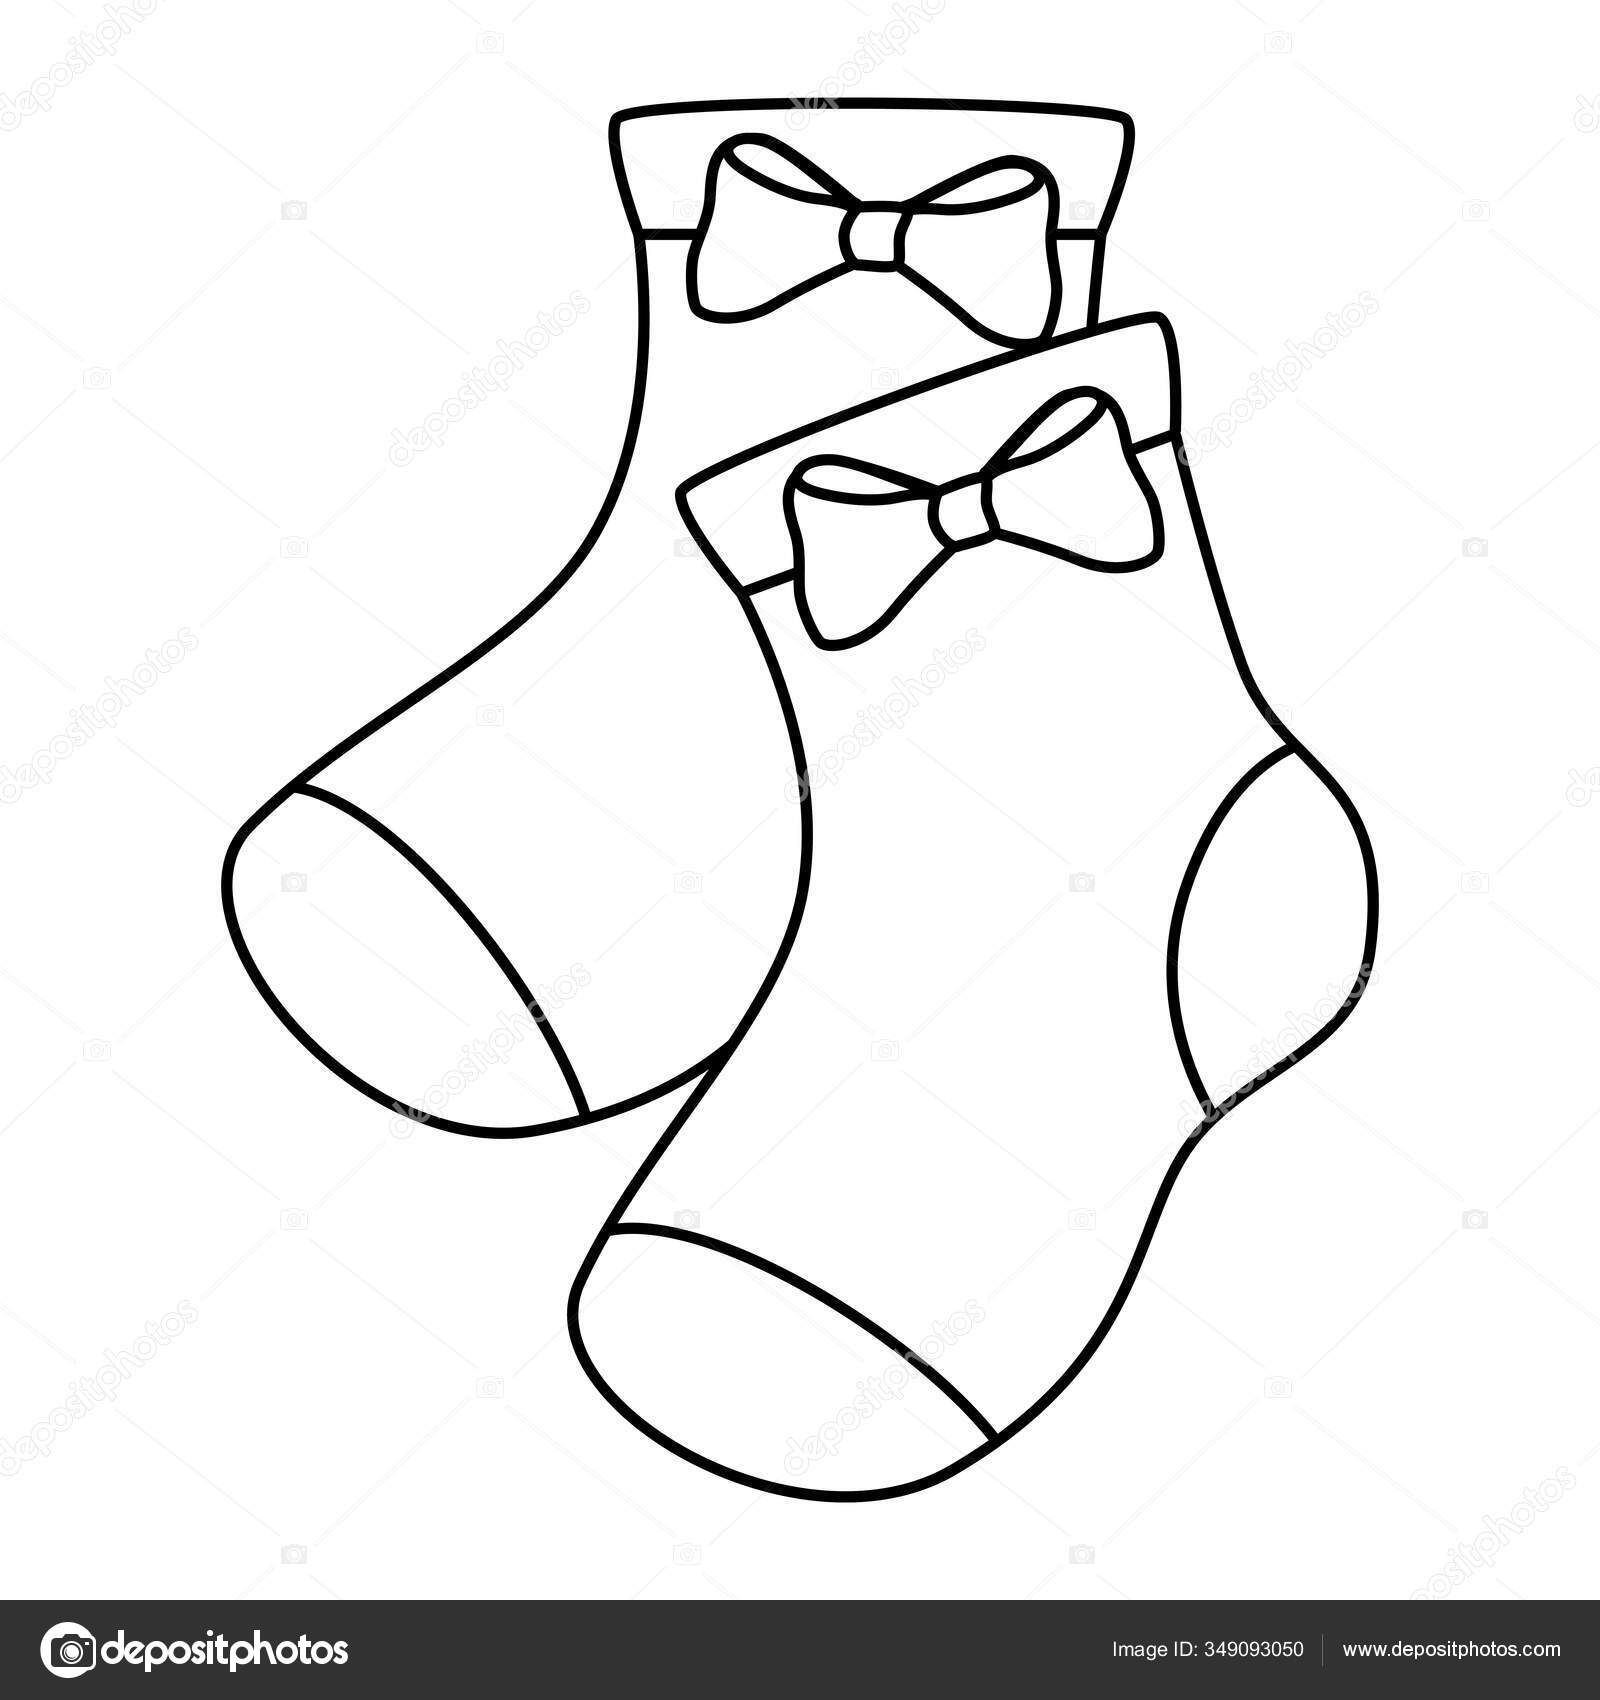 Socks icon. Baby underwear sign. Stock Vector by ©Tanyastock 79516690